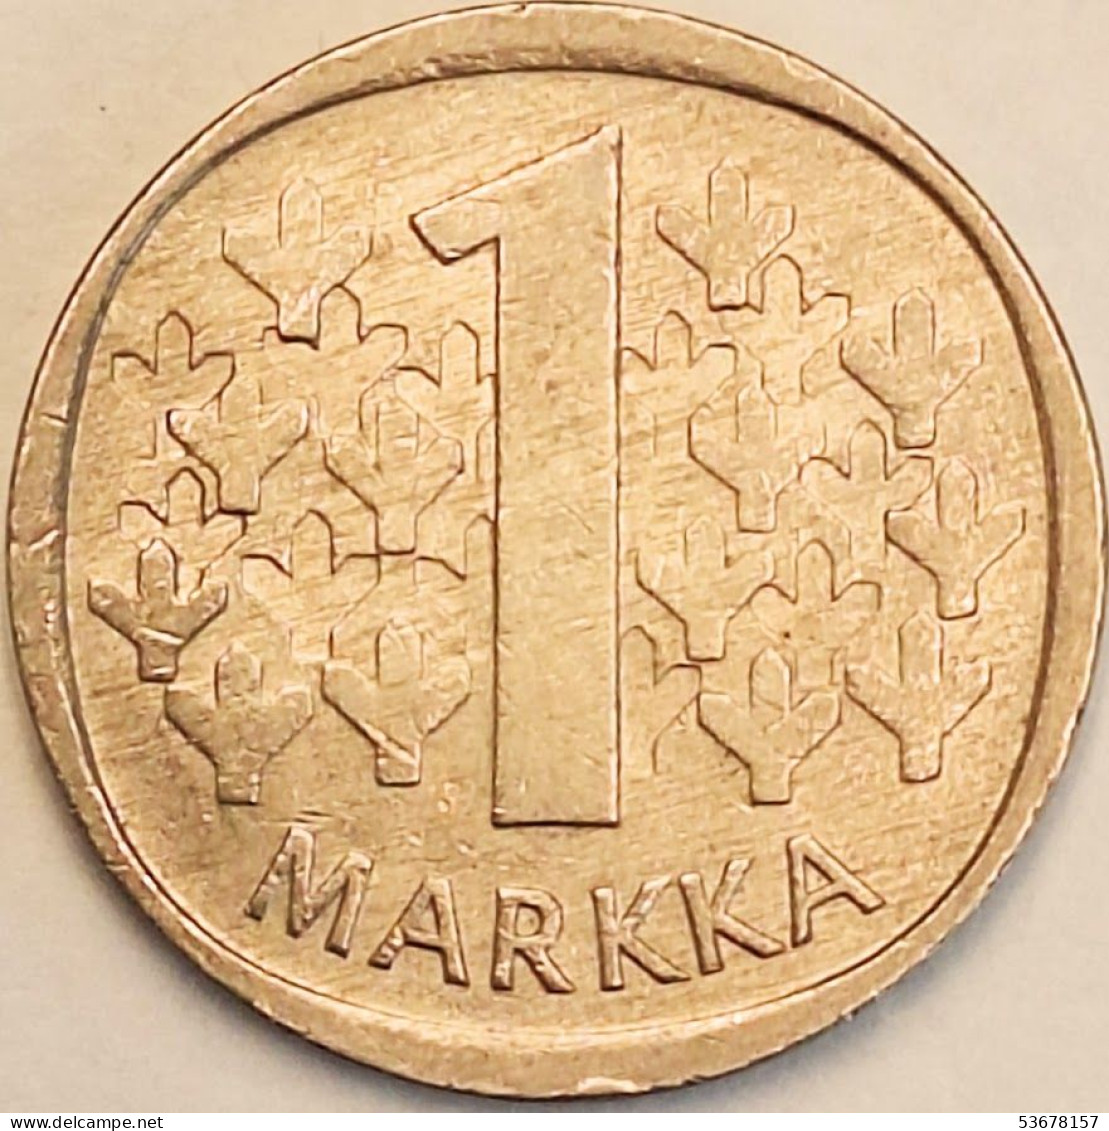 Finland - Markka 1977 K, KM# 49a (#3950) - Finlande